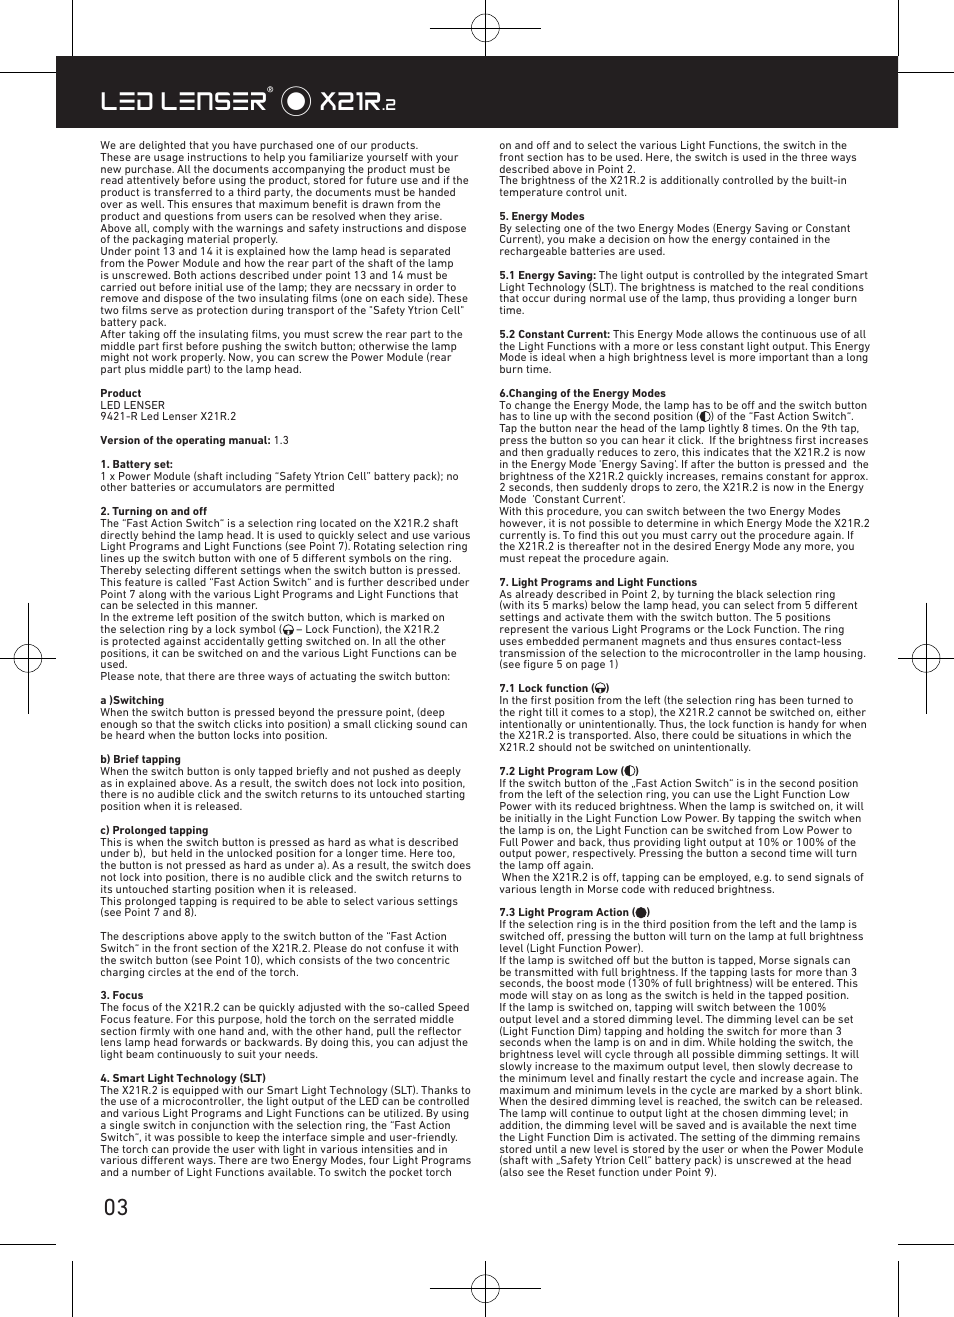 Led lenser® * x21r LENSER X21R.2 User Manual | Page 4 / | Original mode